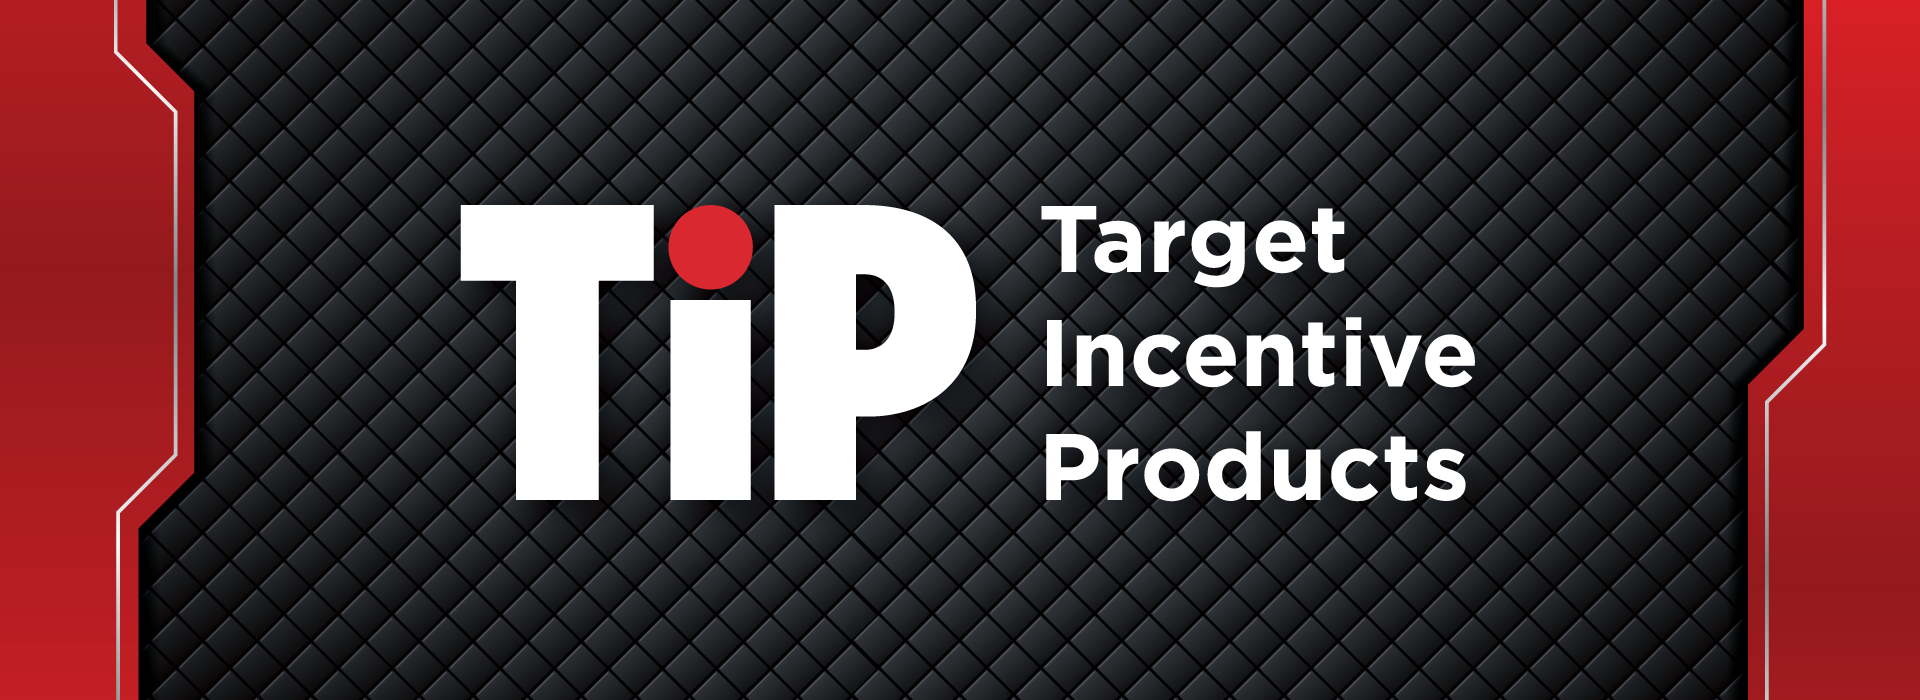 Biamp TIP - Target Incentive Products Program banner image